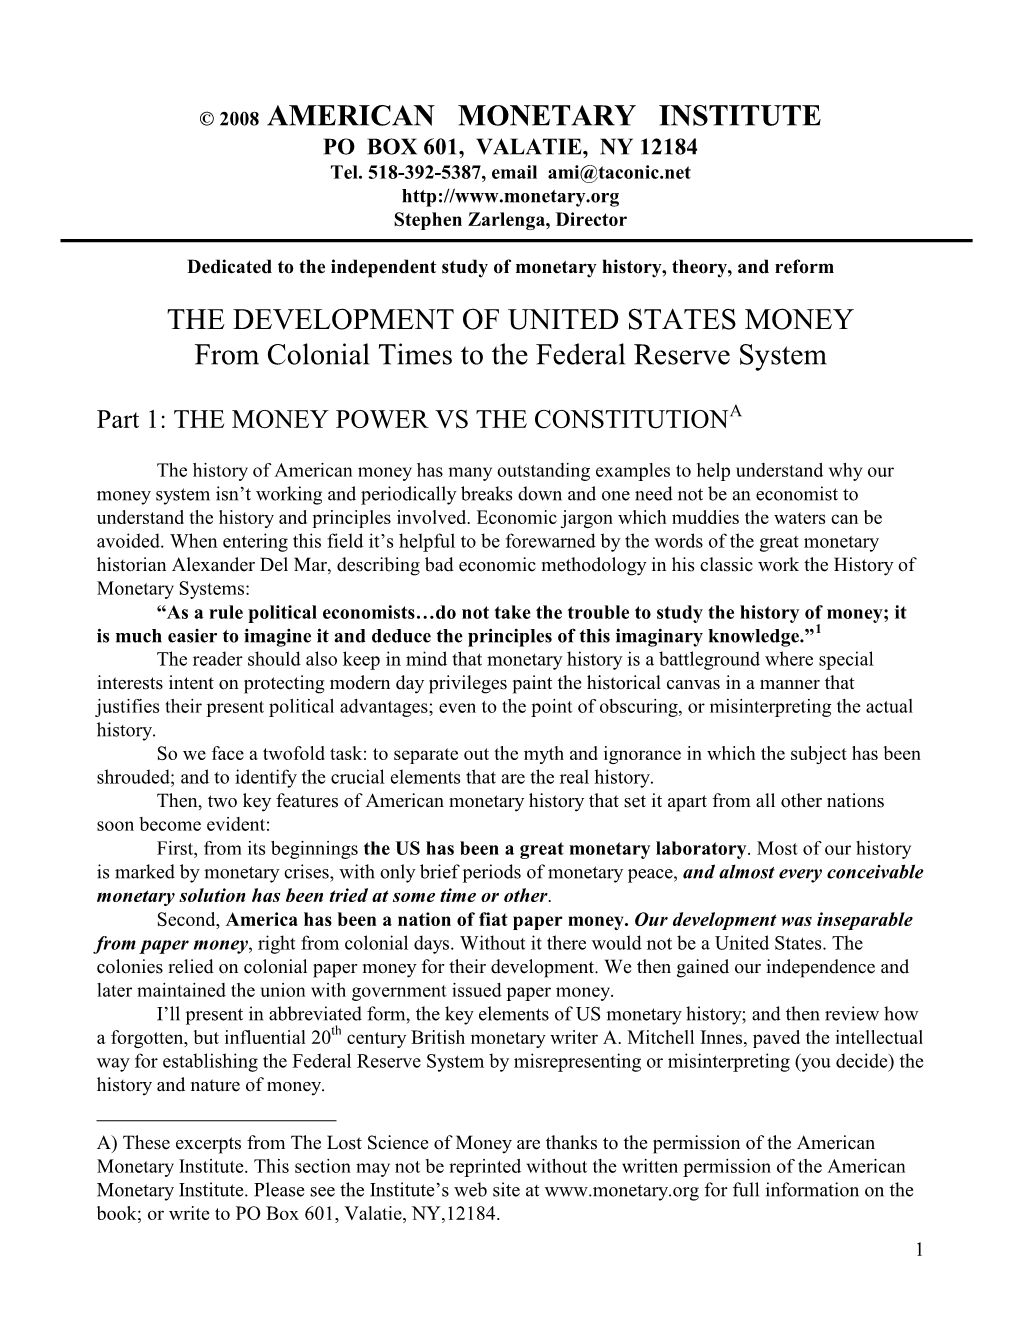 Development of U.S. Money